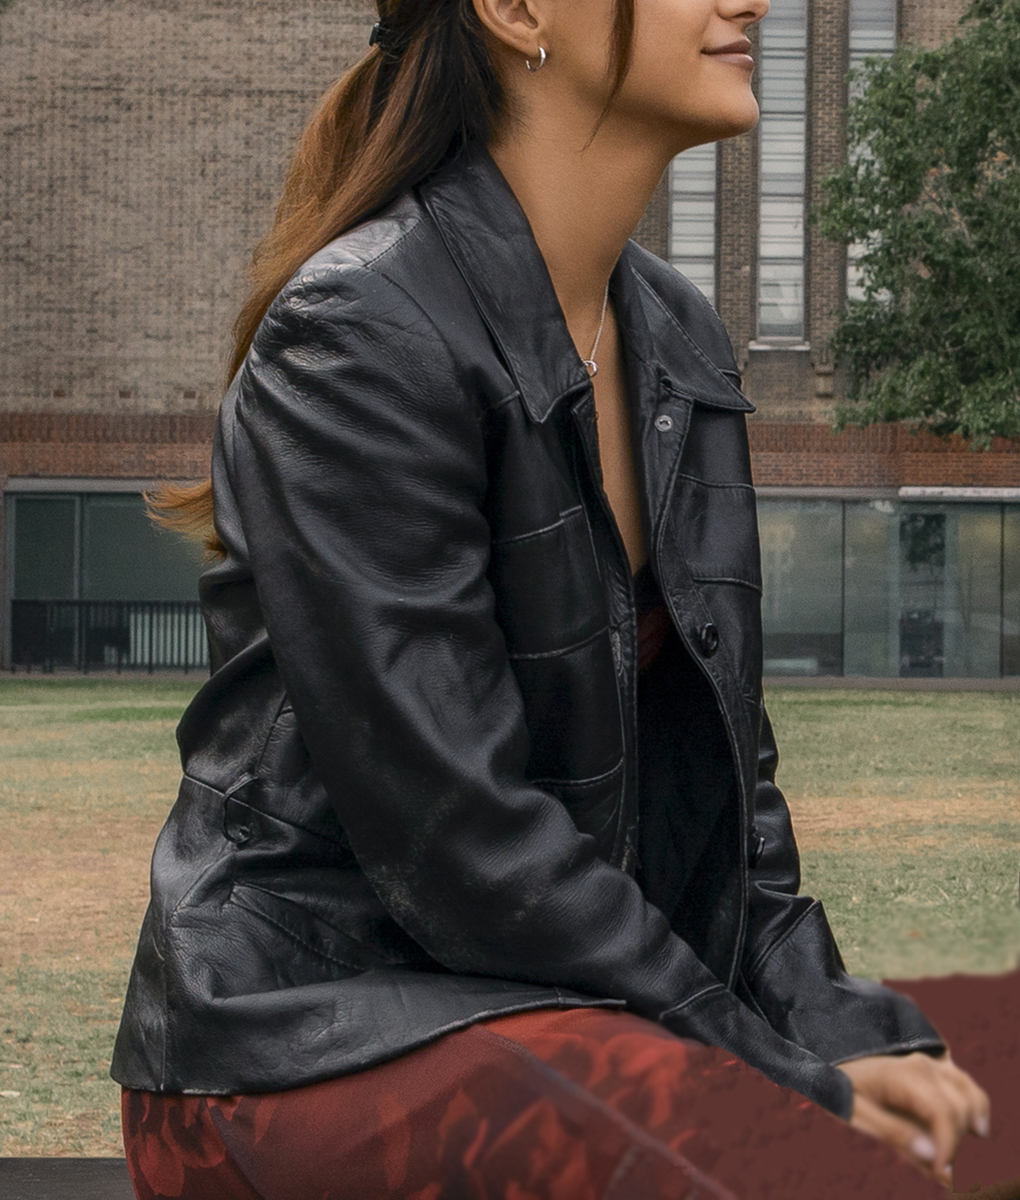 Camila Mendes Upgraded Black Leather Jacket